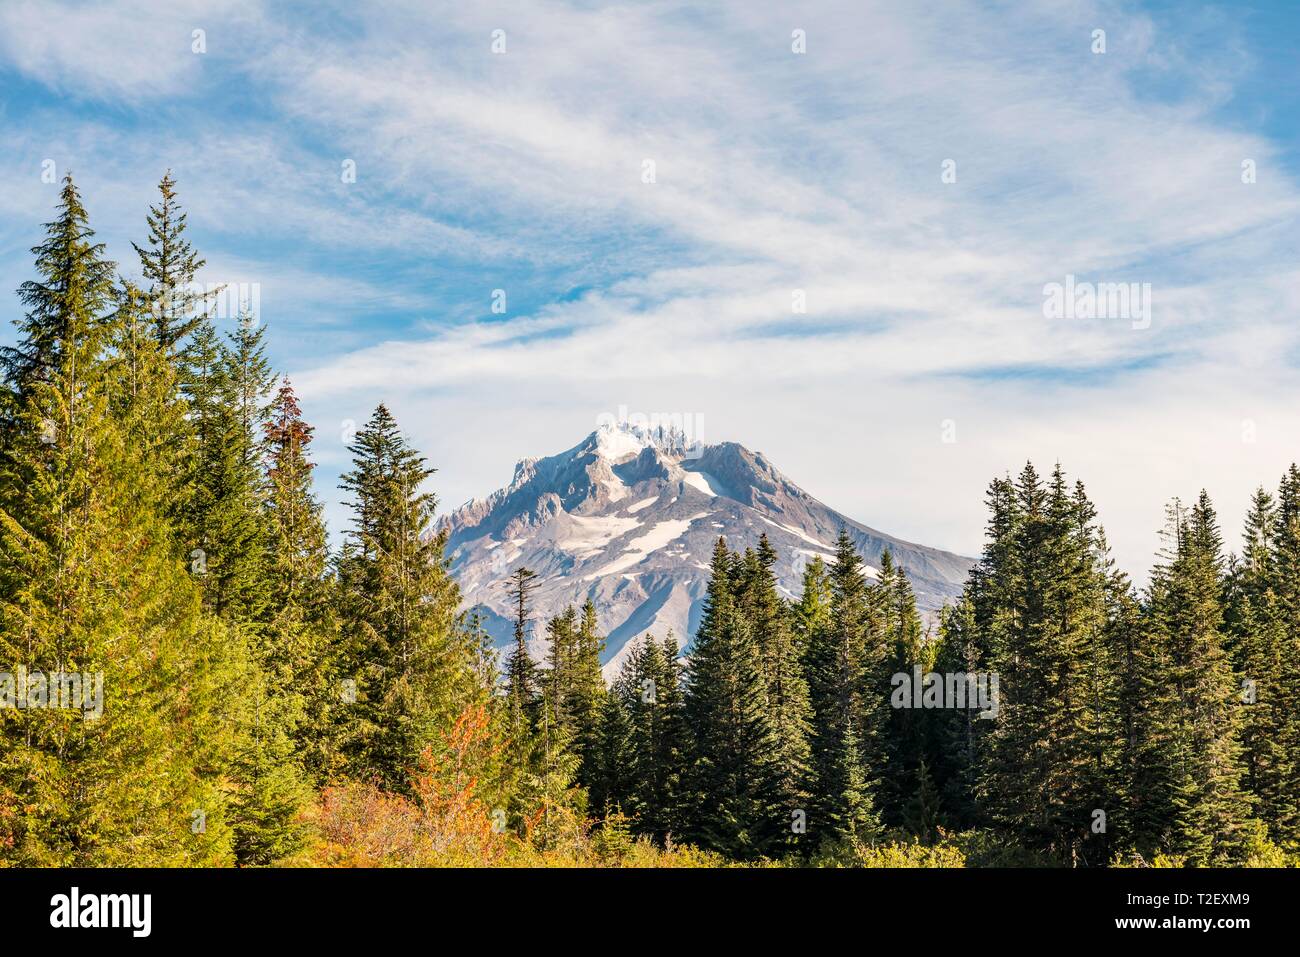 Sommet du volcan Mt Hood derrière une forêt, Oregon, USA Banque D'Images